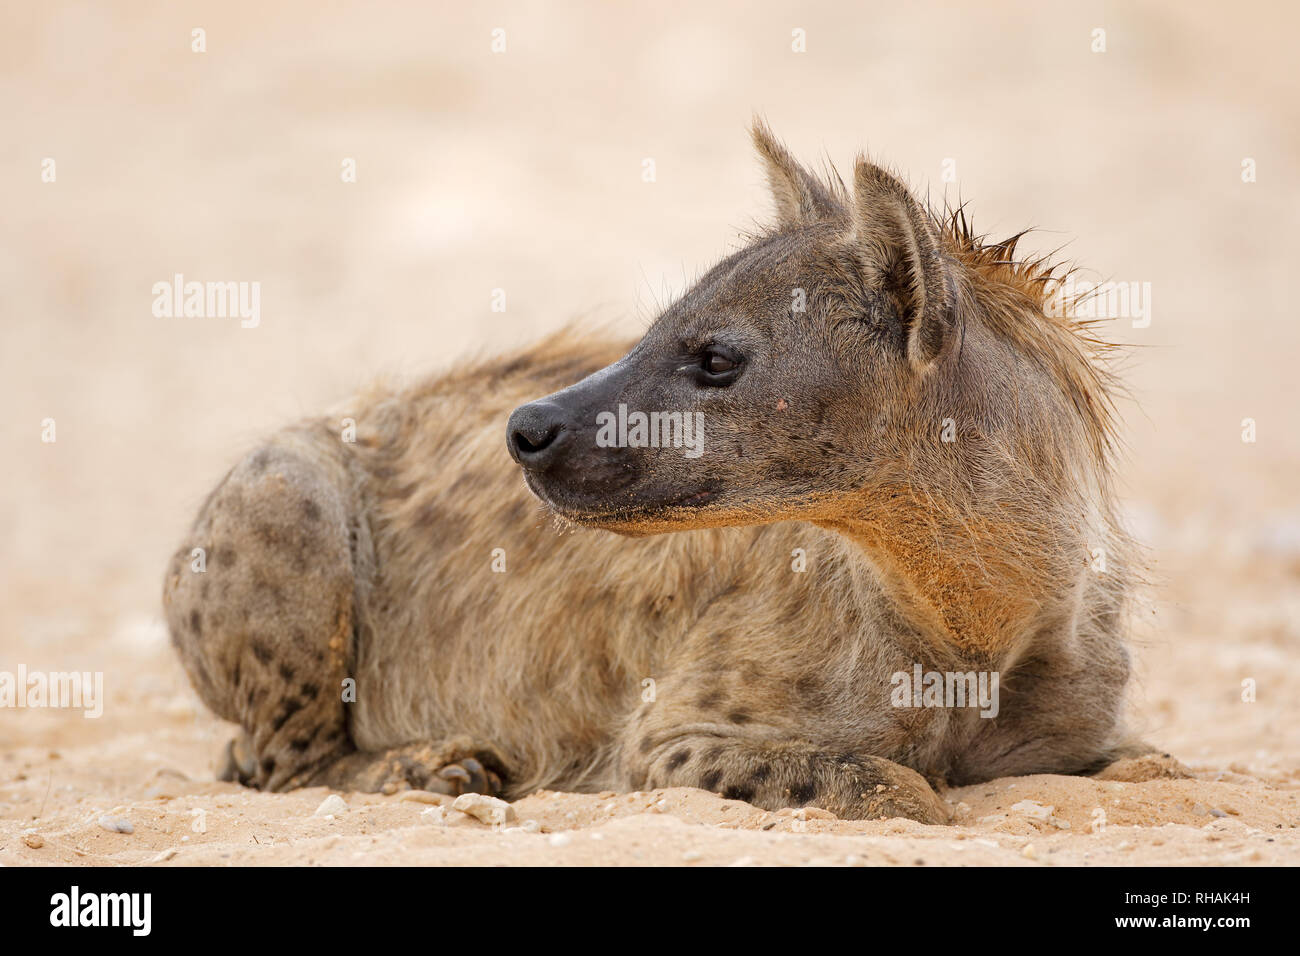 A spotted hyena (Crocuta crocuta) resting, Kalahari desert, South Africa Stock Photo